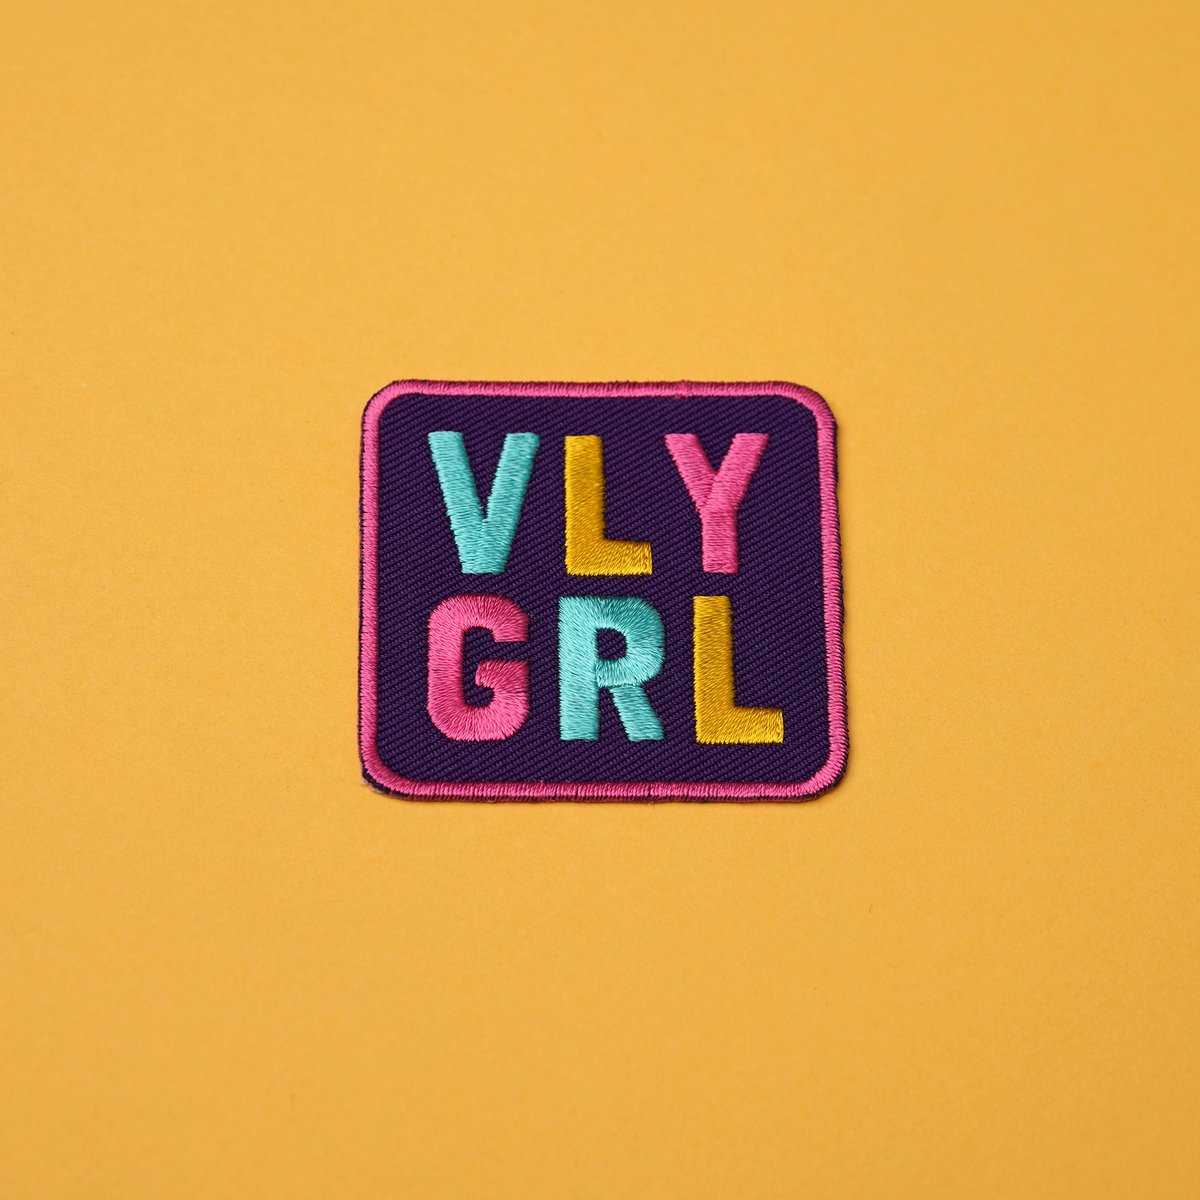 VLY GRL Logo Patch